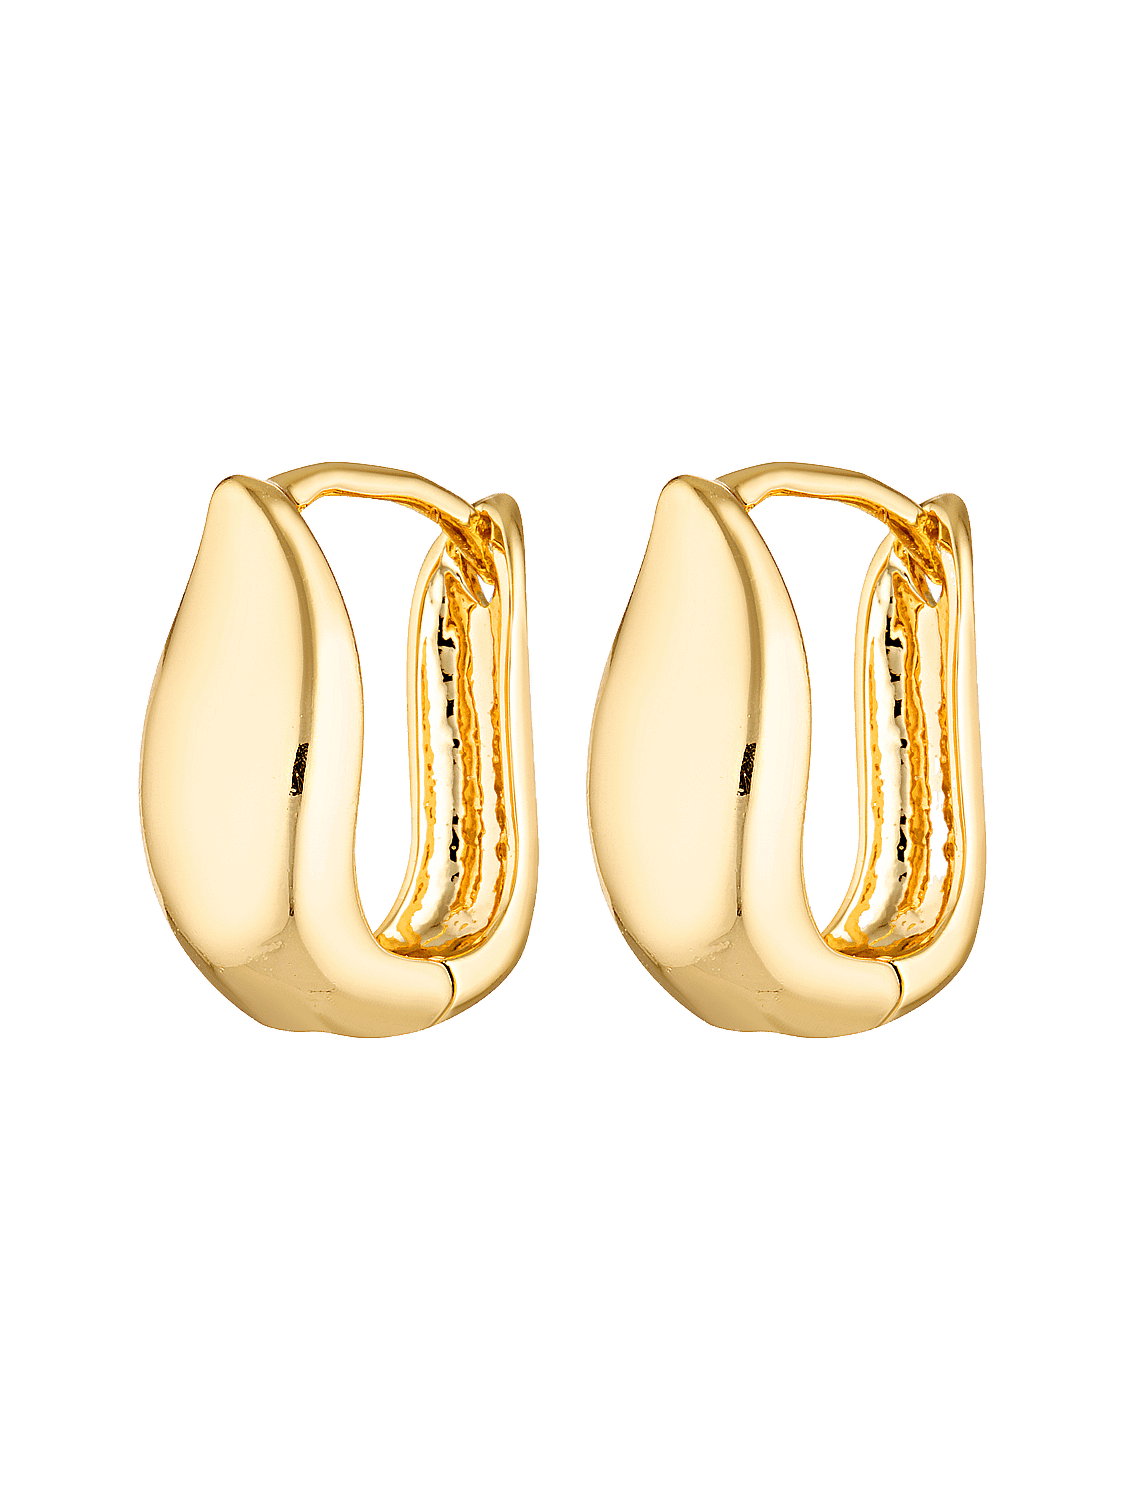 gold filled harp shape earrings